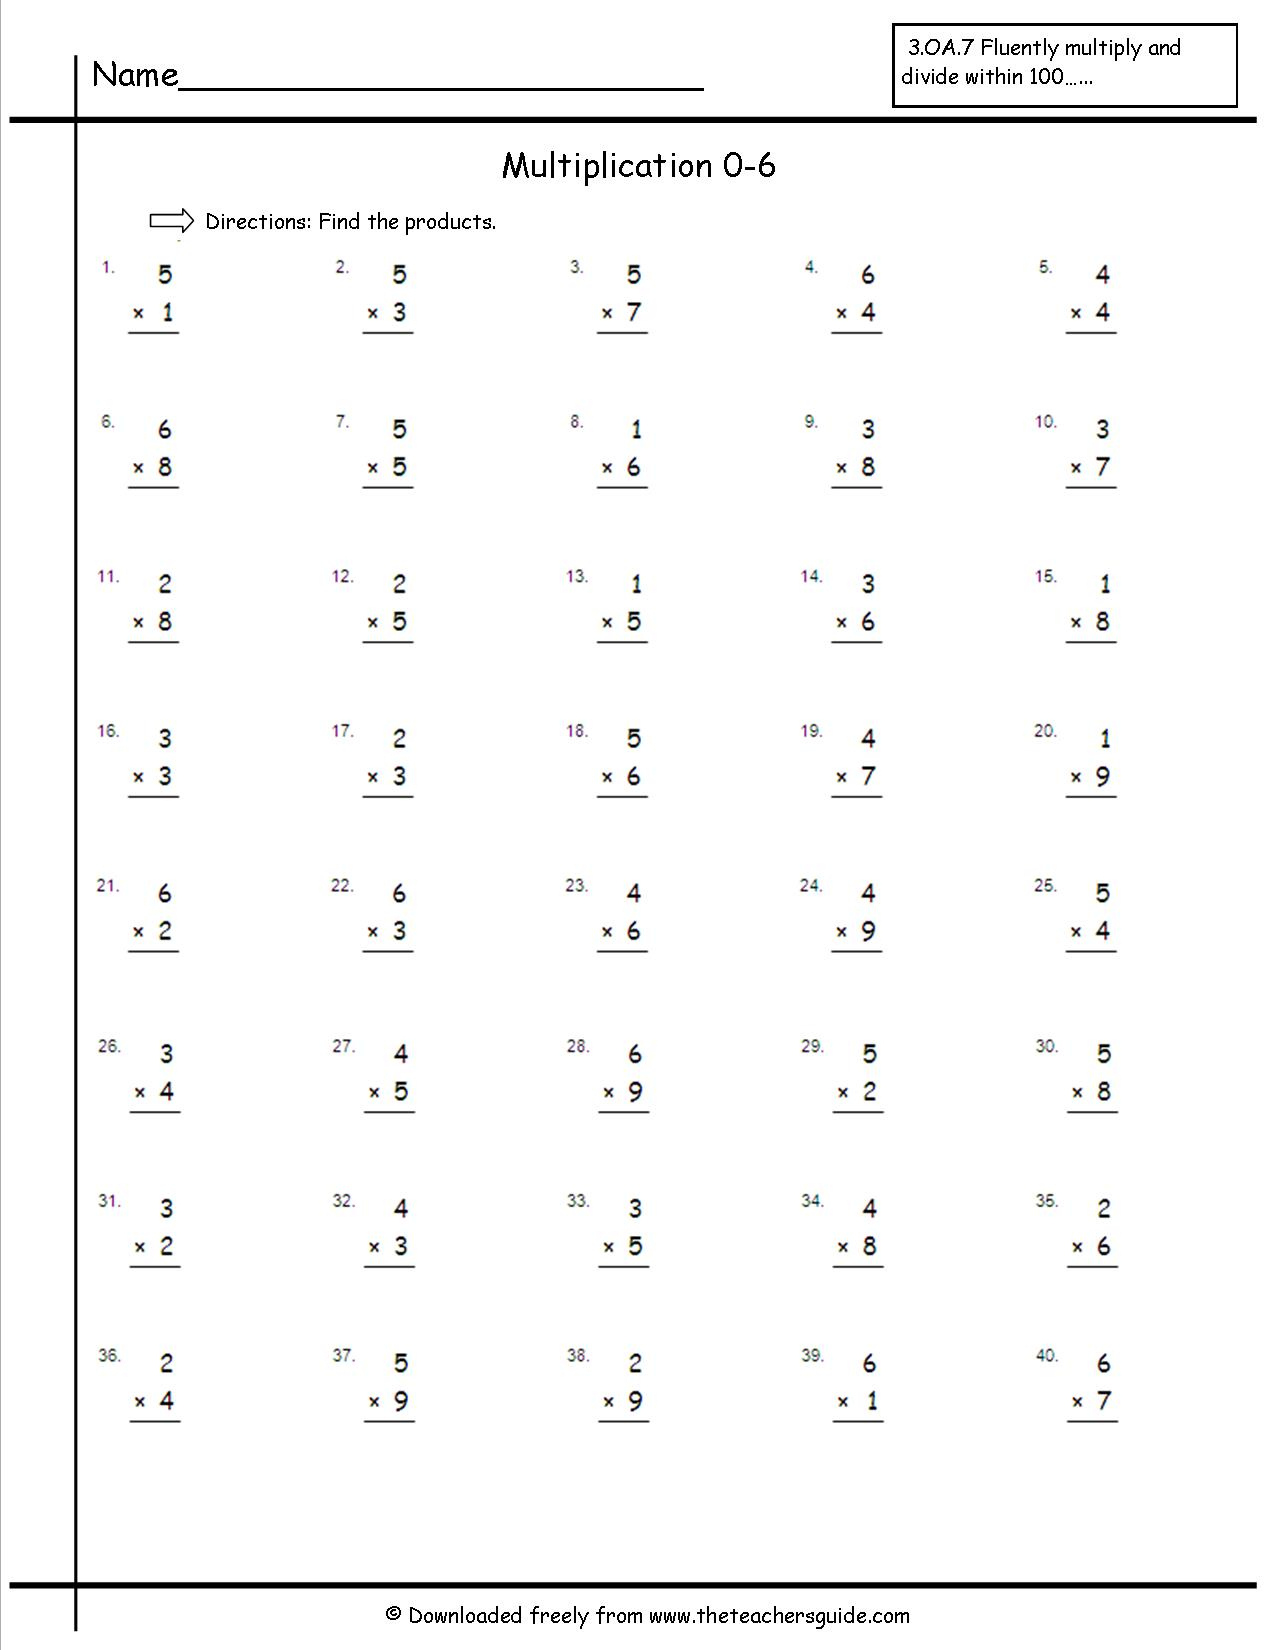 free-multiplication-worksheets-printable-0-5-multiplication-worksheets